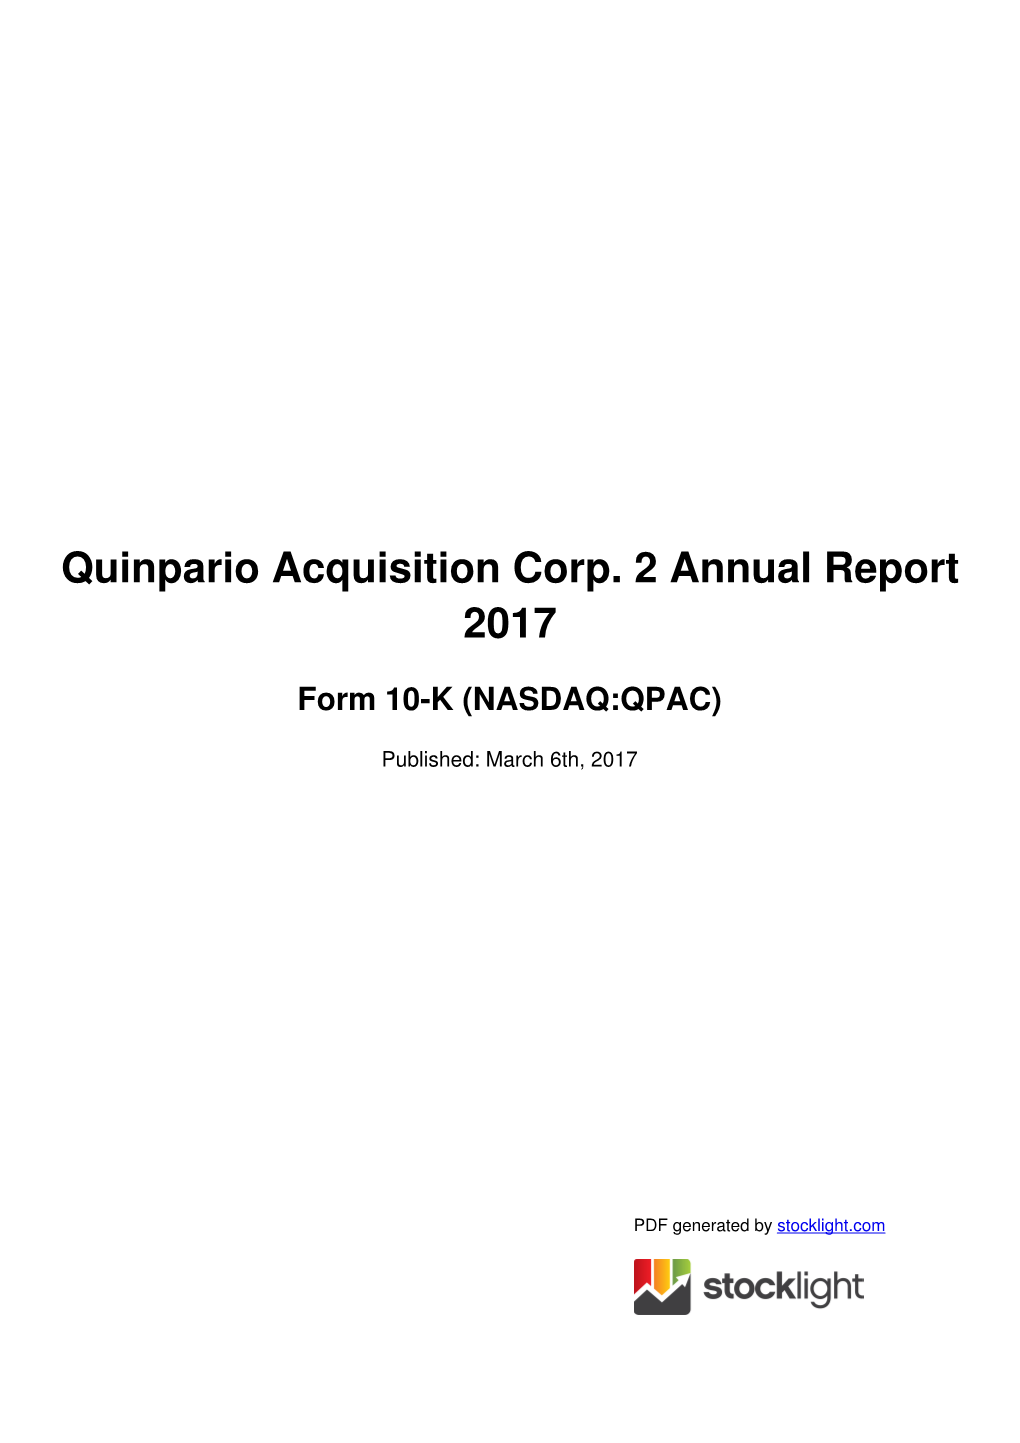 Quinpario Acquisition Corp. 2 Annual Report 2017